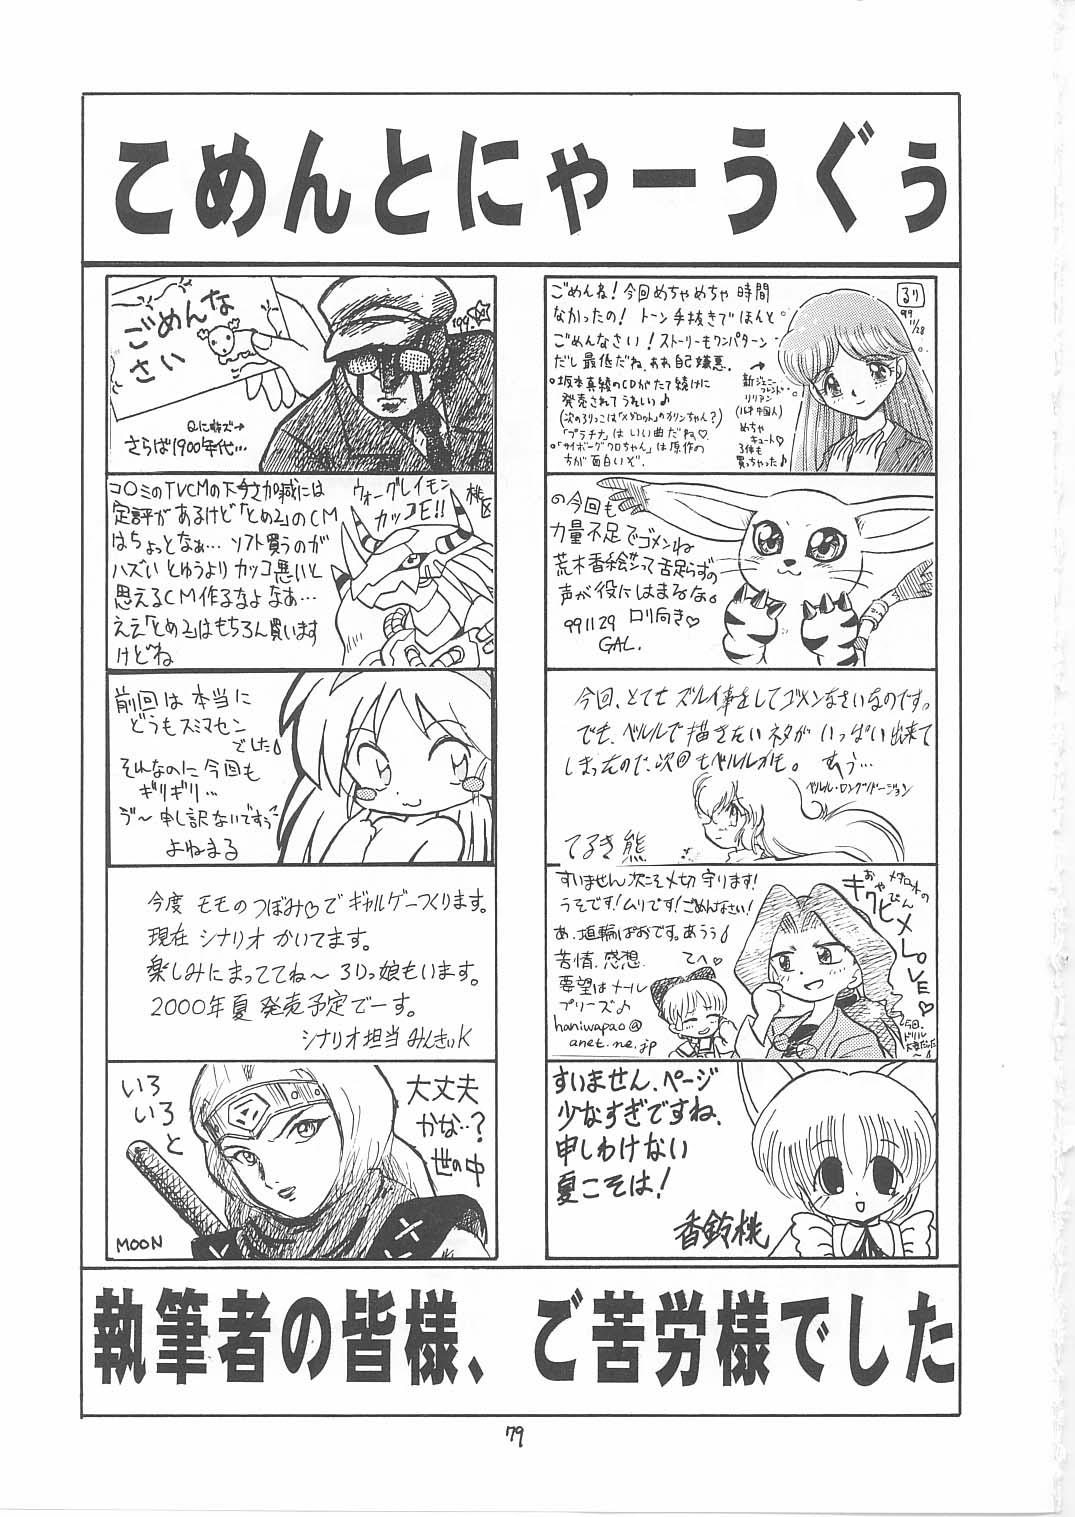 Mommy Lolikko LOVE 12 - Ojamajo doremi Digimon adventure Alien 9 Butthole - Page 78